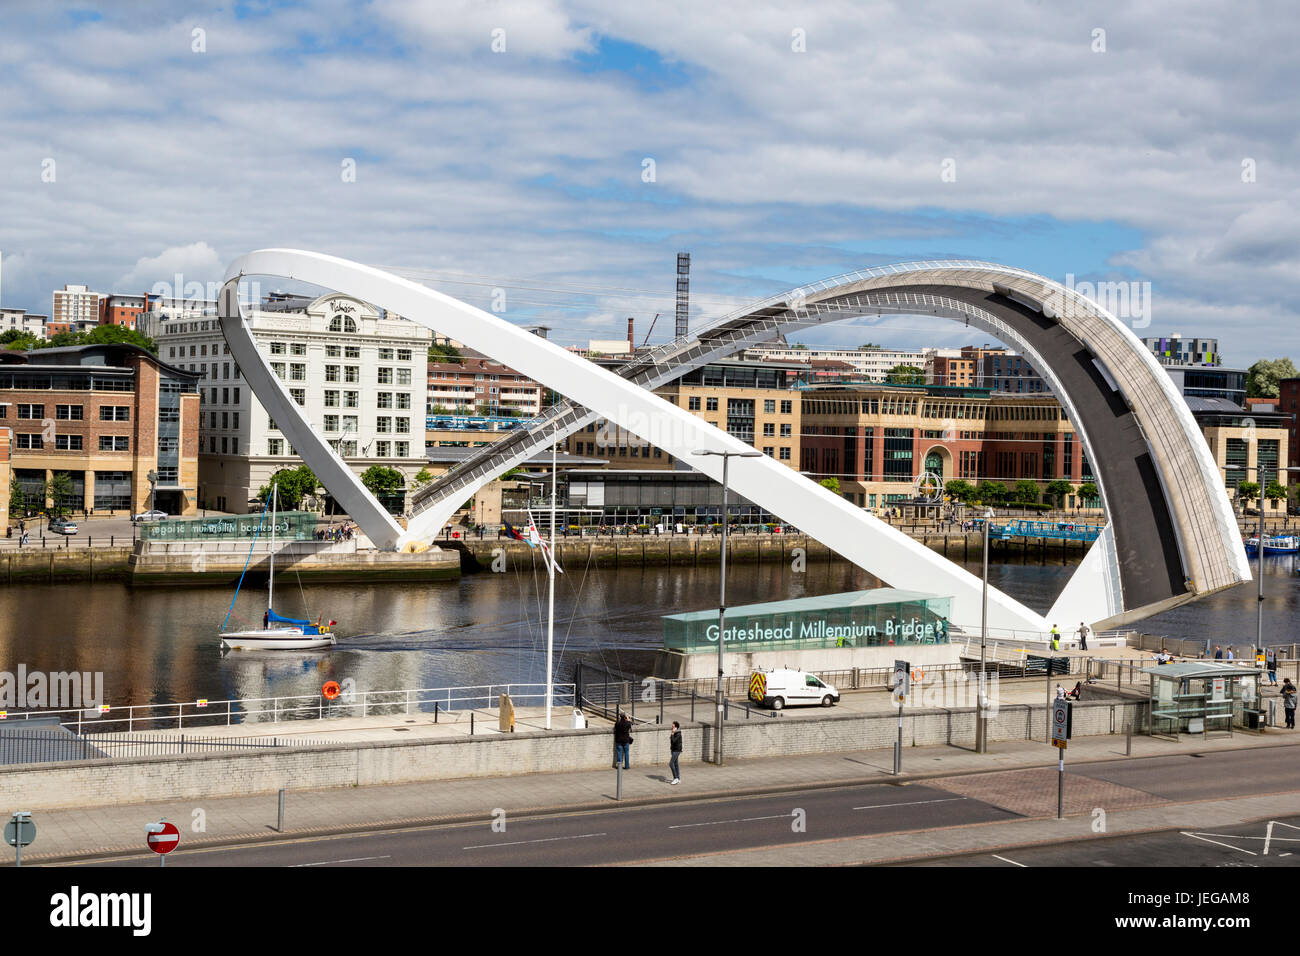 Newcastle-upon-Tyne, England, UK.  Gateshead Millennium Bridge in Mid-day Rotation  over the River Tyne. Stock Photo